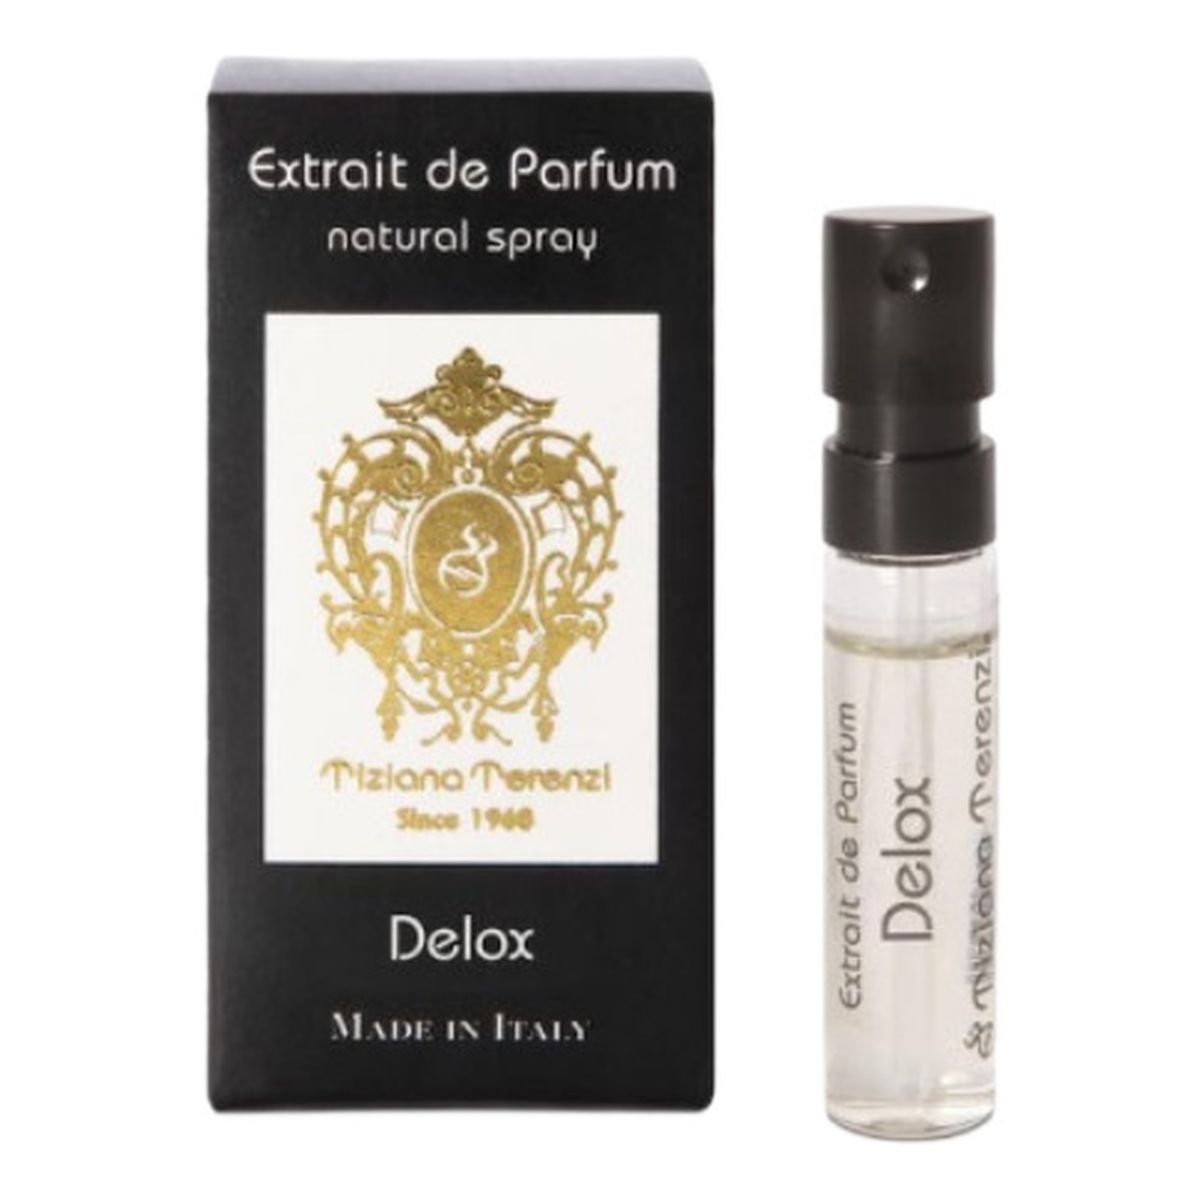 Tiziana Terenzi Delox ekstrakt perfum spray próbka 1,5 ml 1.5ml